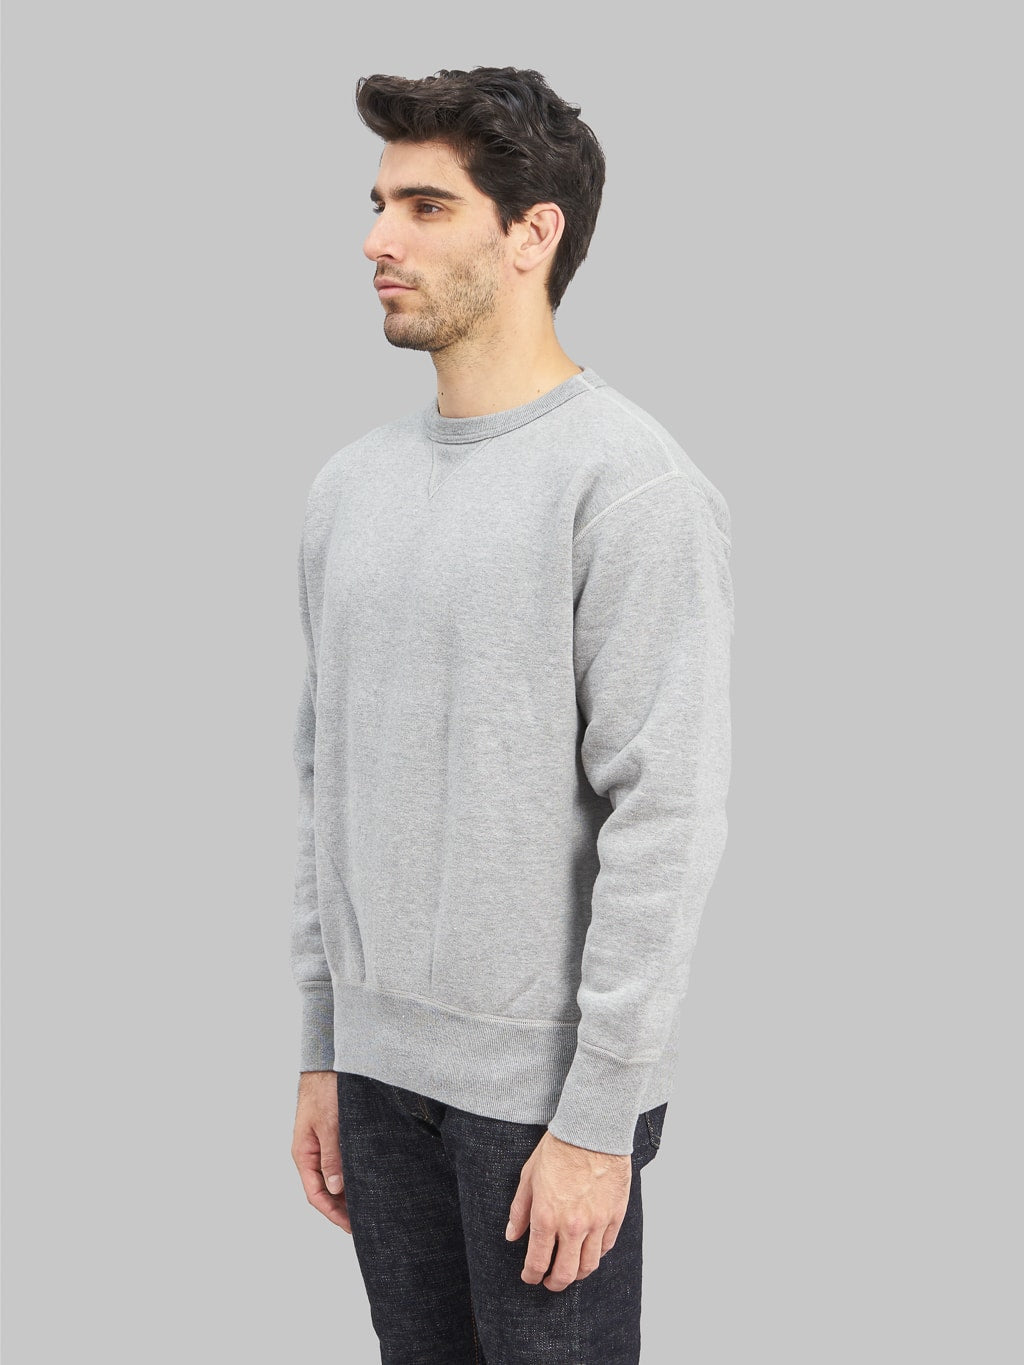 The Strike Gold Loopwheeled Sweatshirt grey model side fit